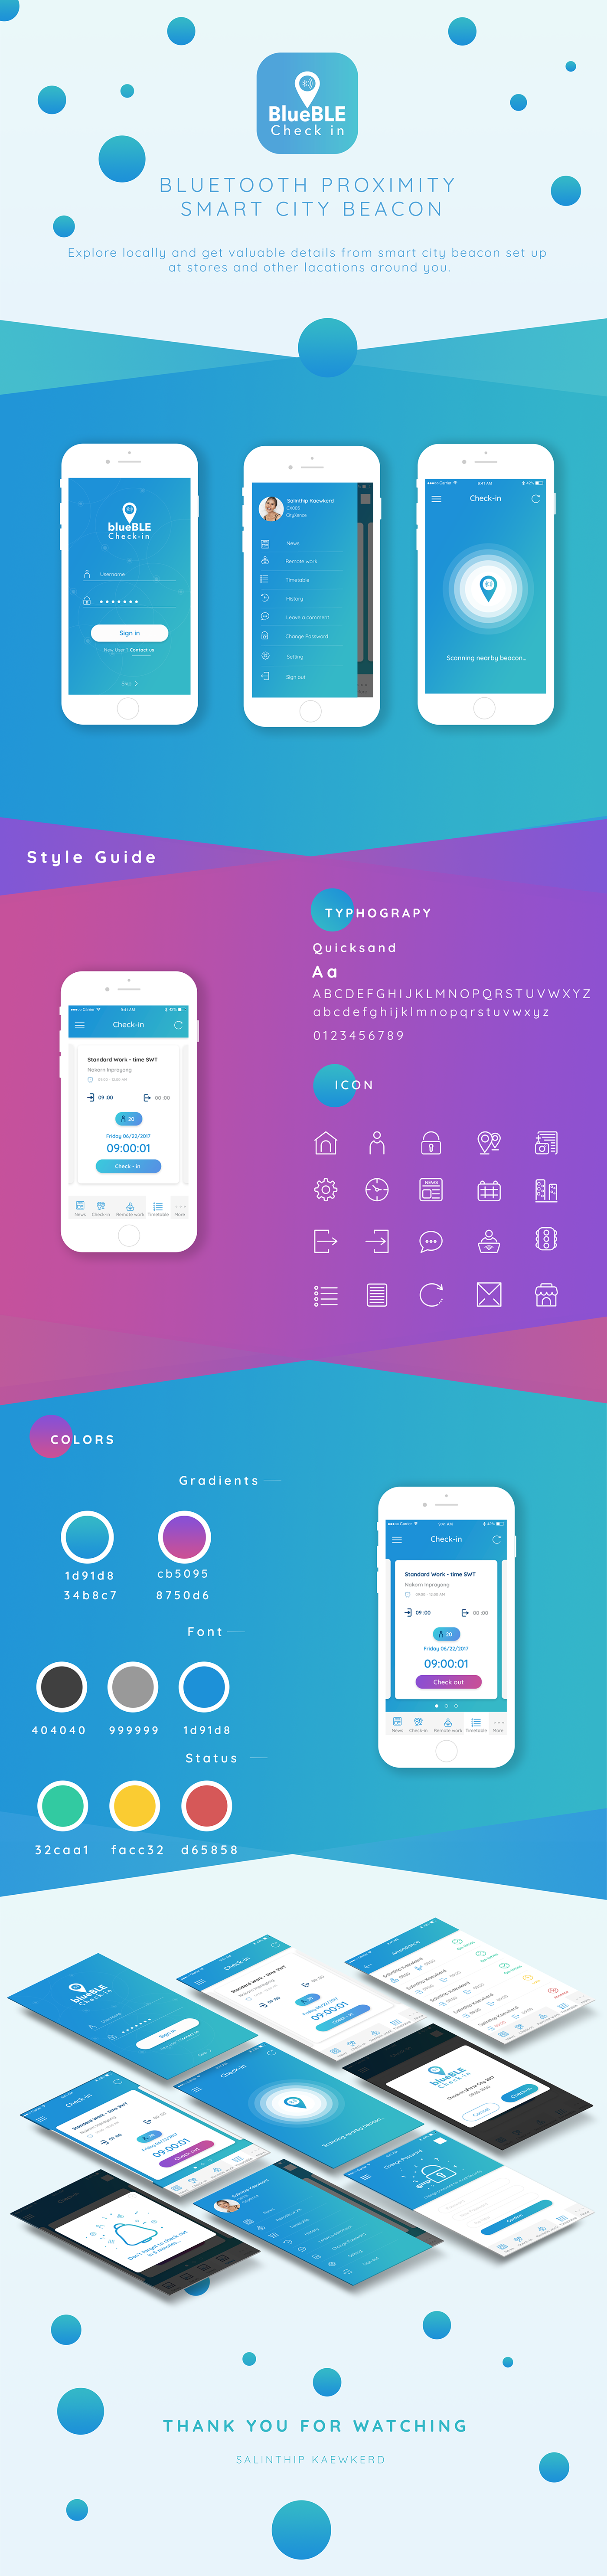 ux/ui bluetooth design UI ux Mobile Application idea blue gradient creative